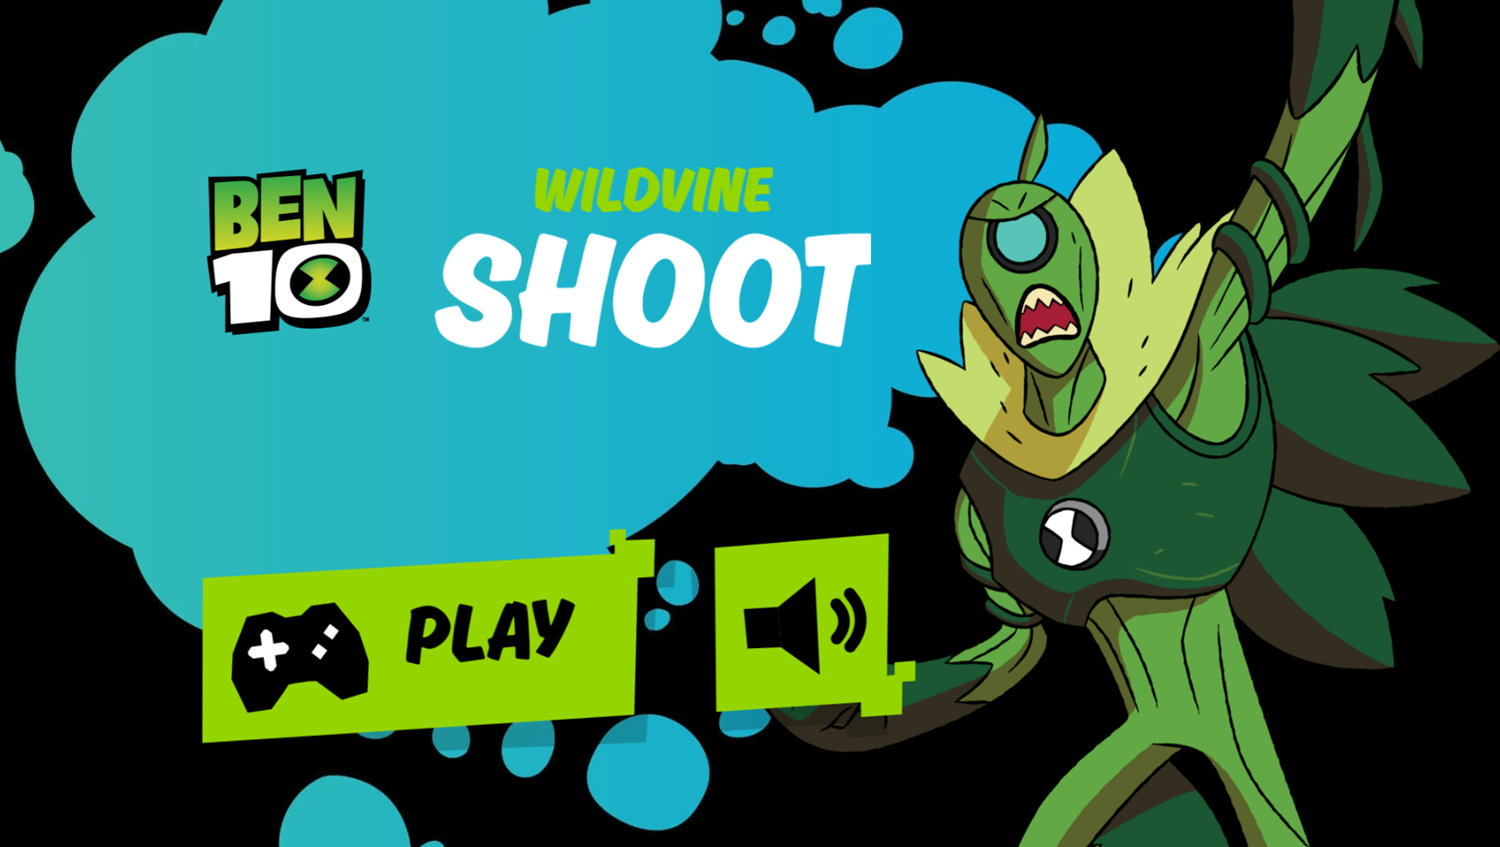 Ben 10 Wildvine Shoot Game Welcome Screen Screenshot.